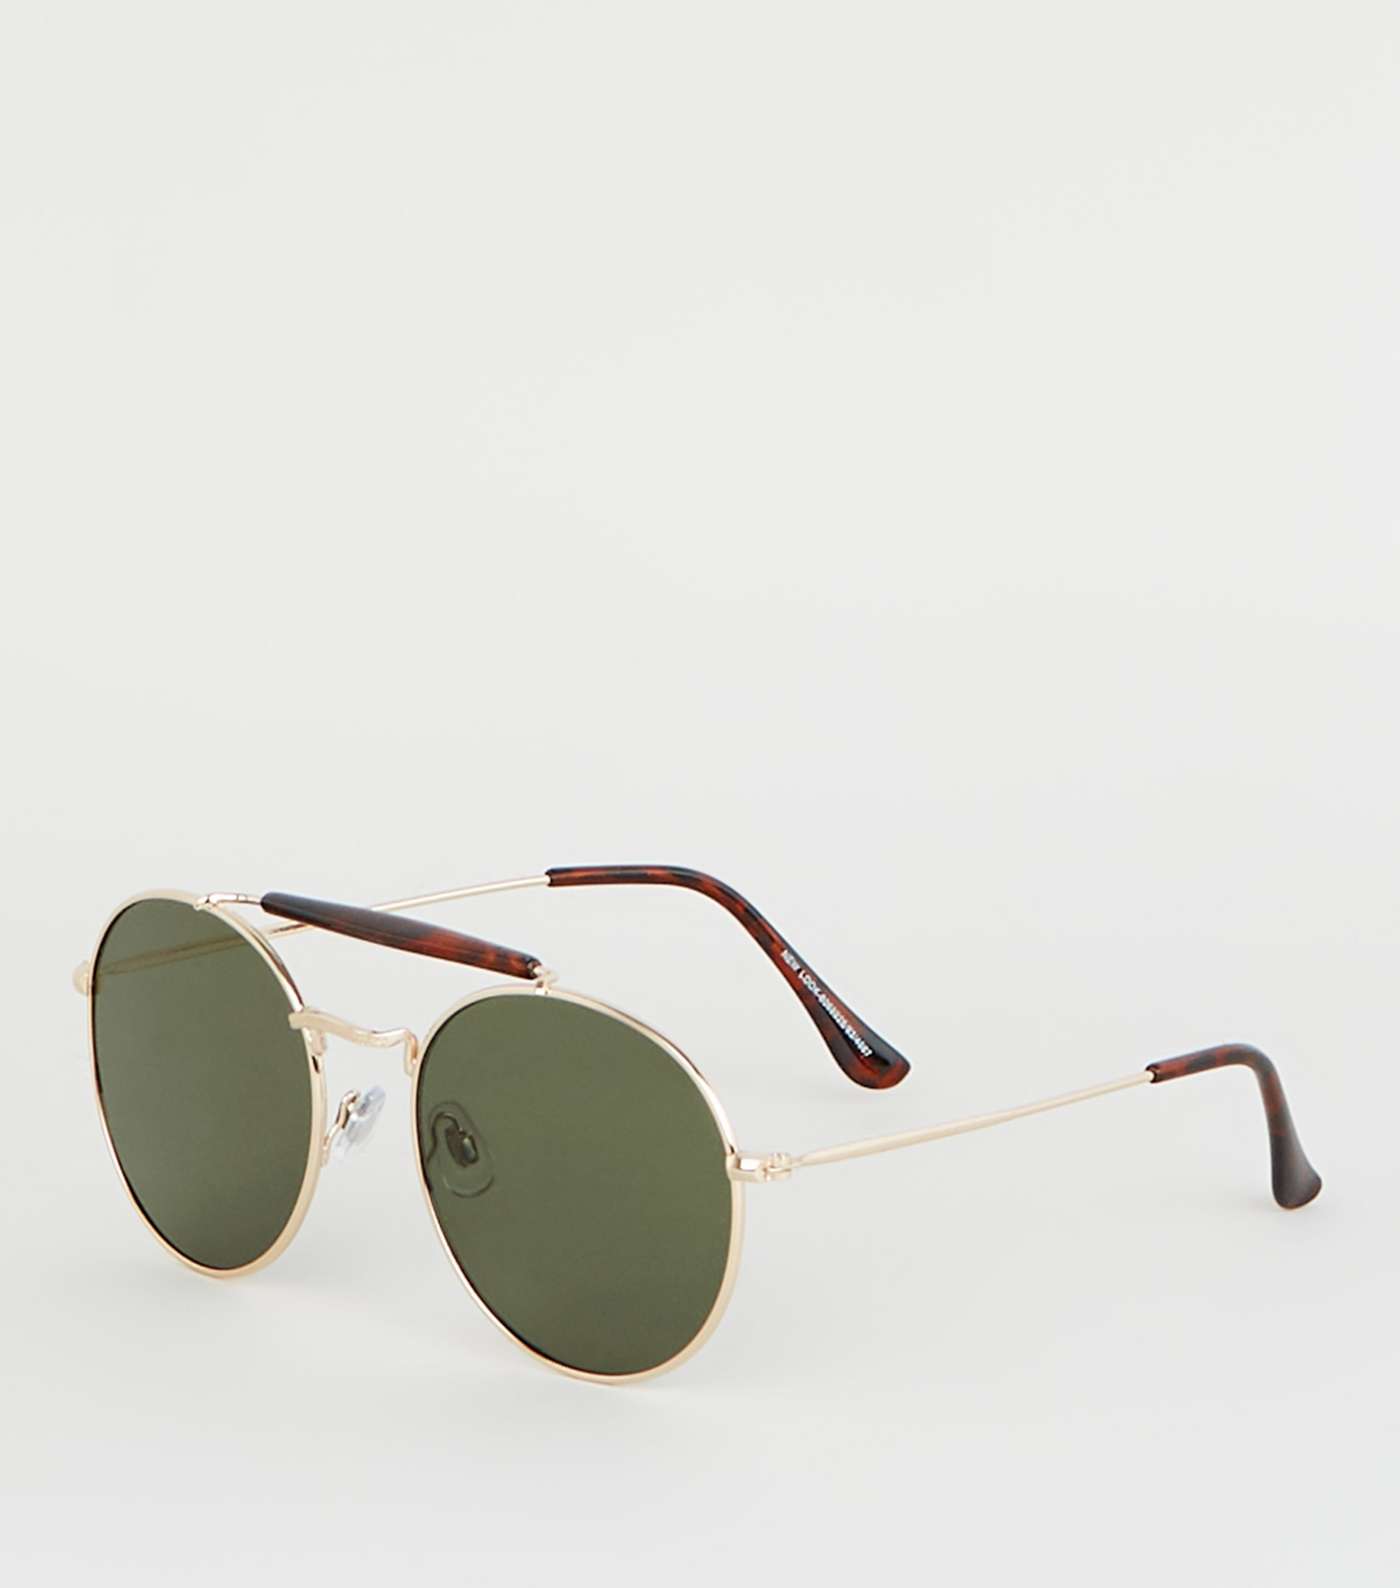 Gold Faux Tortoiseshell Brow Bar Pilot Sunglasses 